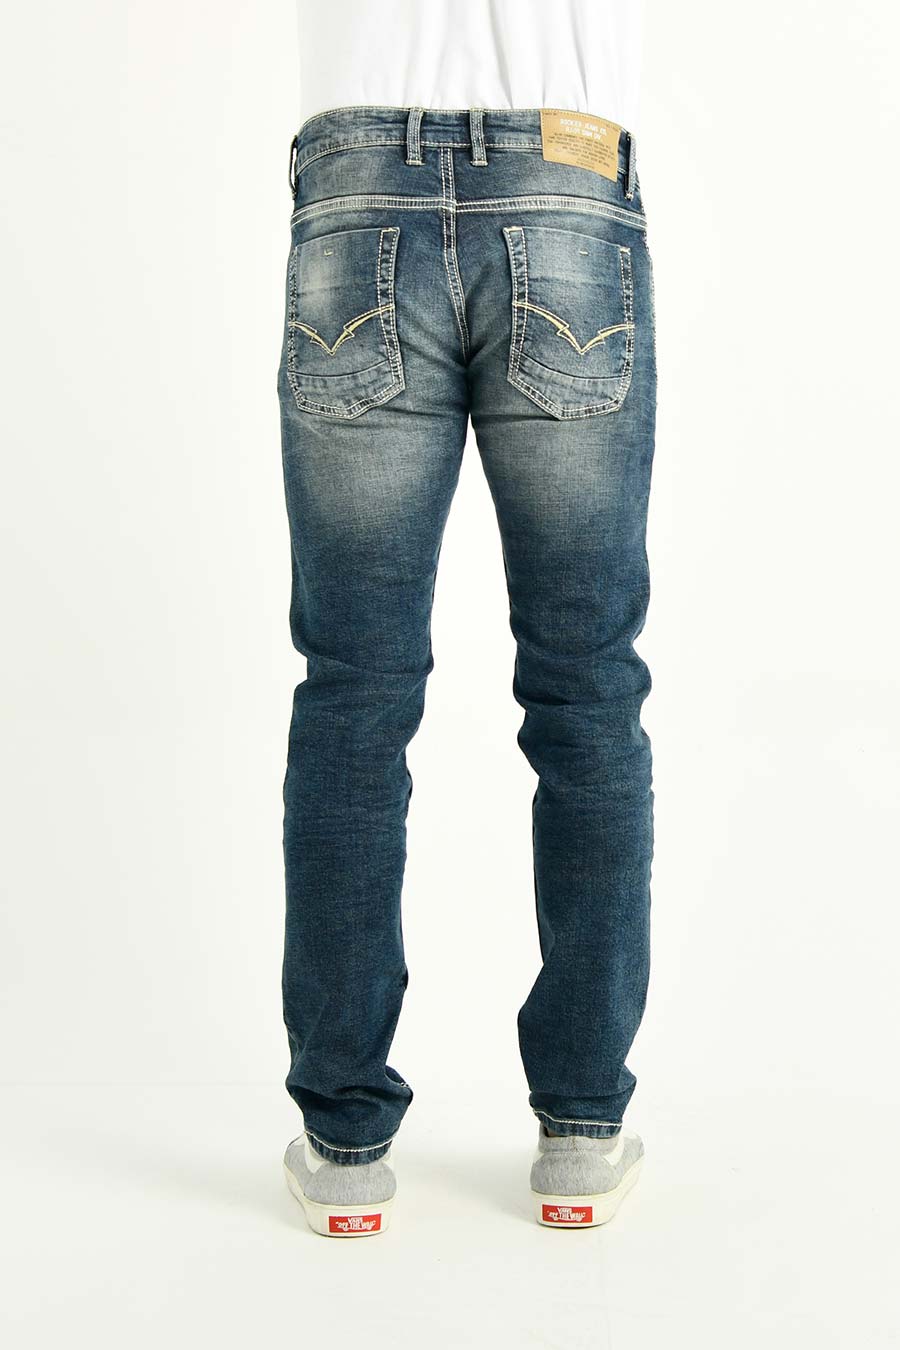 Men’s Denim Jeans-RJ4020